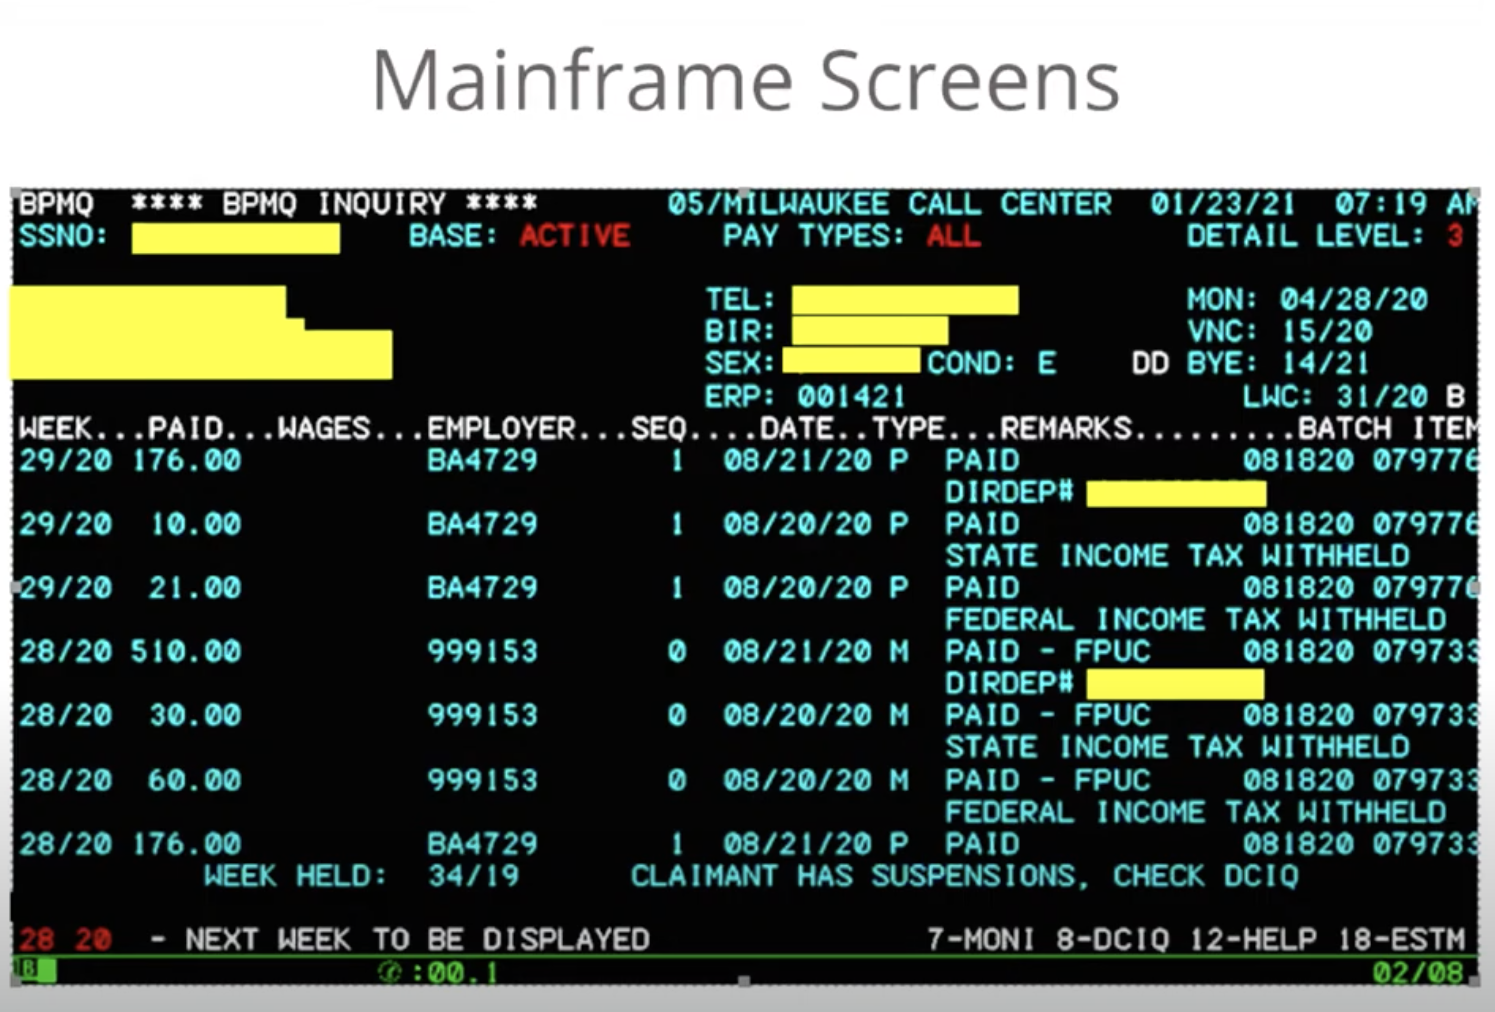 A screenshot of the Wisconsin Department of Workforce Development's "mainframe screen"